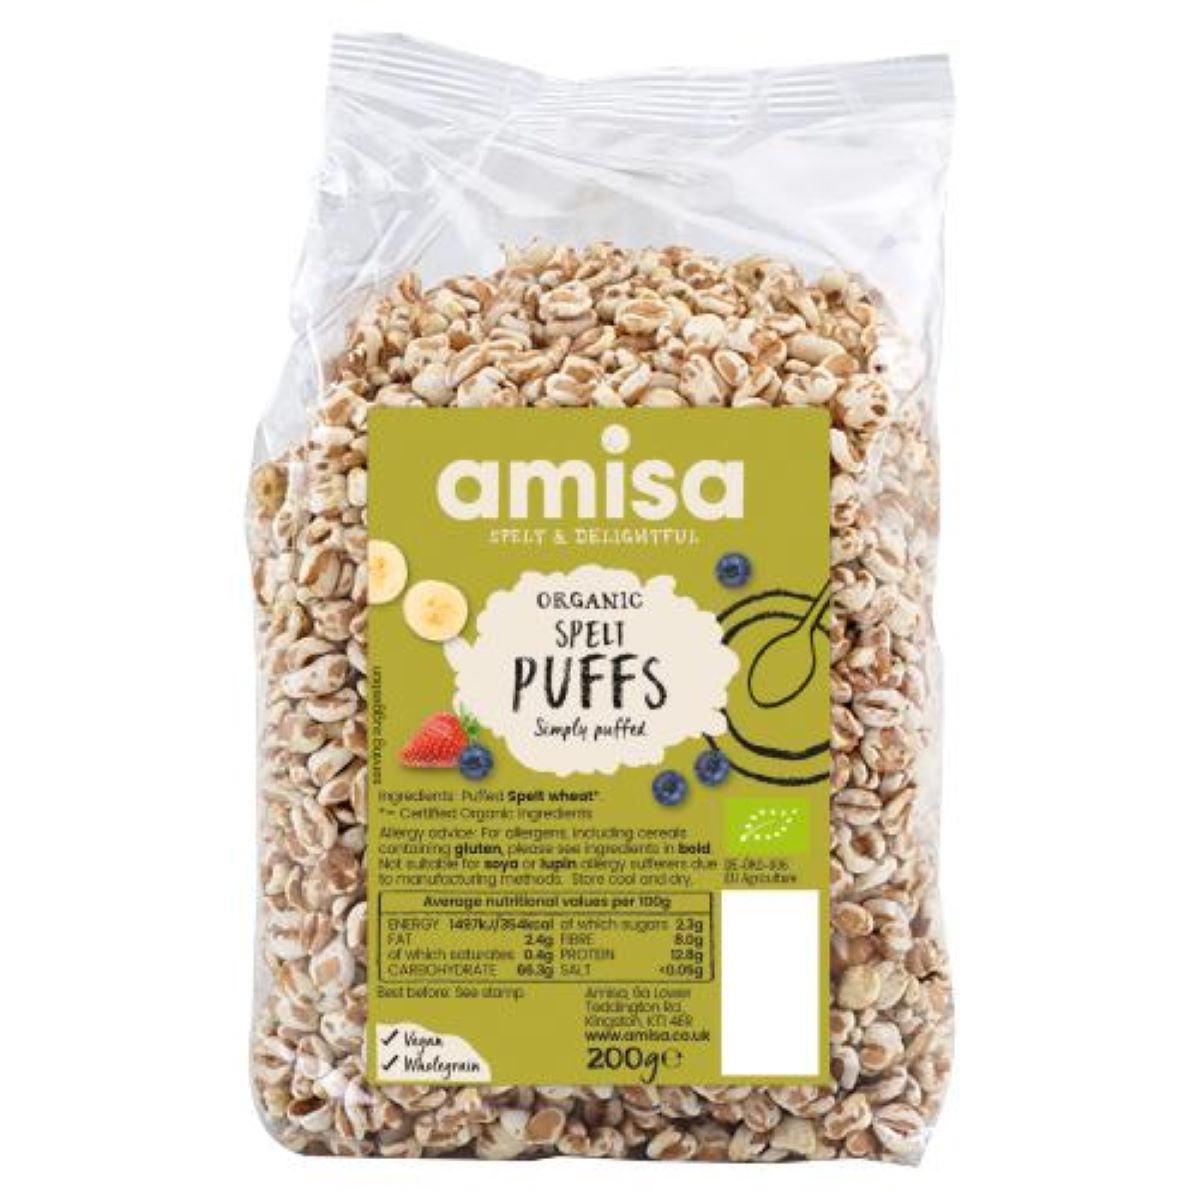 Amisa Organic Spelt Puffs 200g